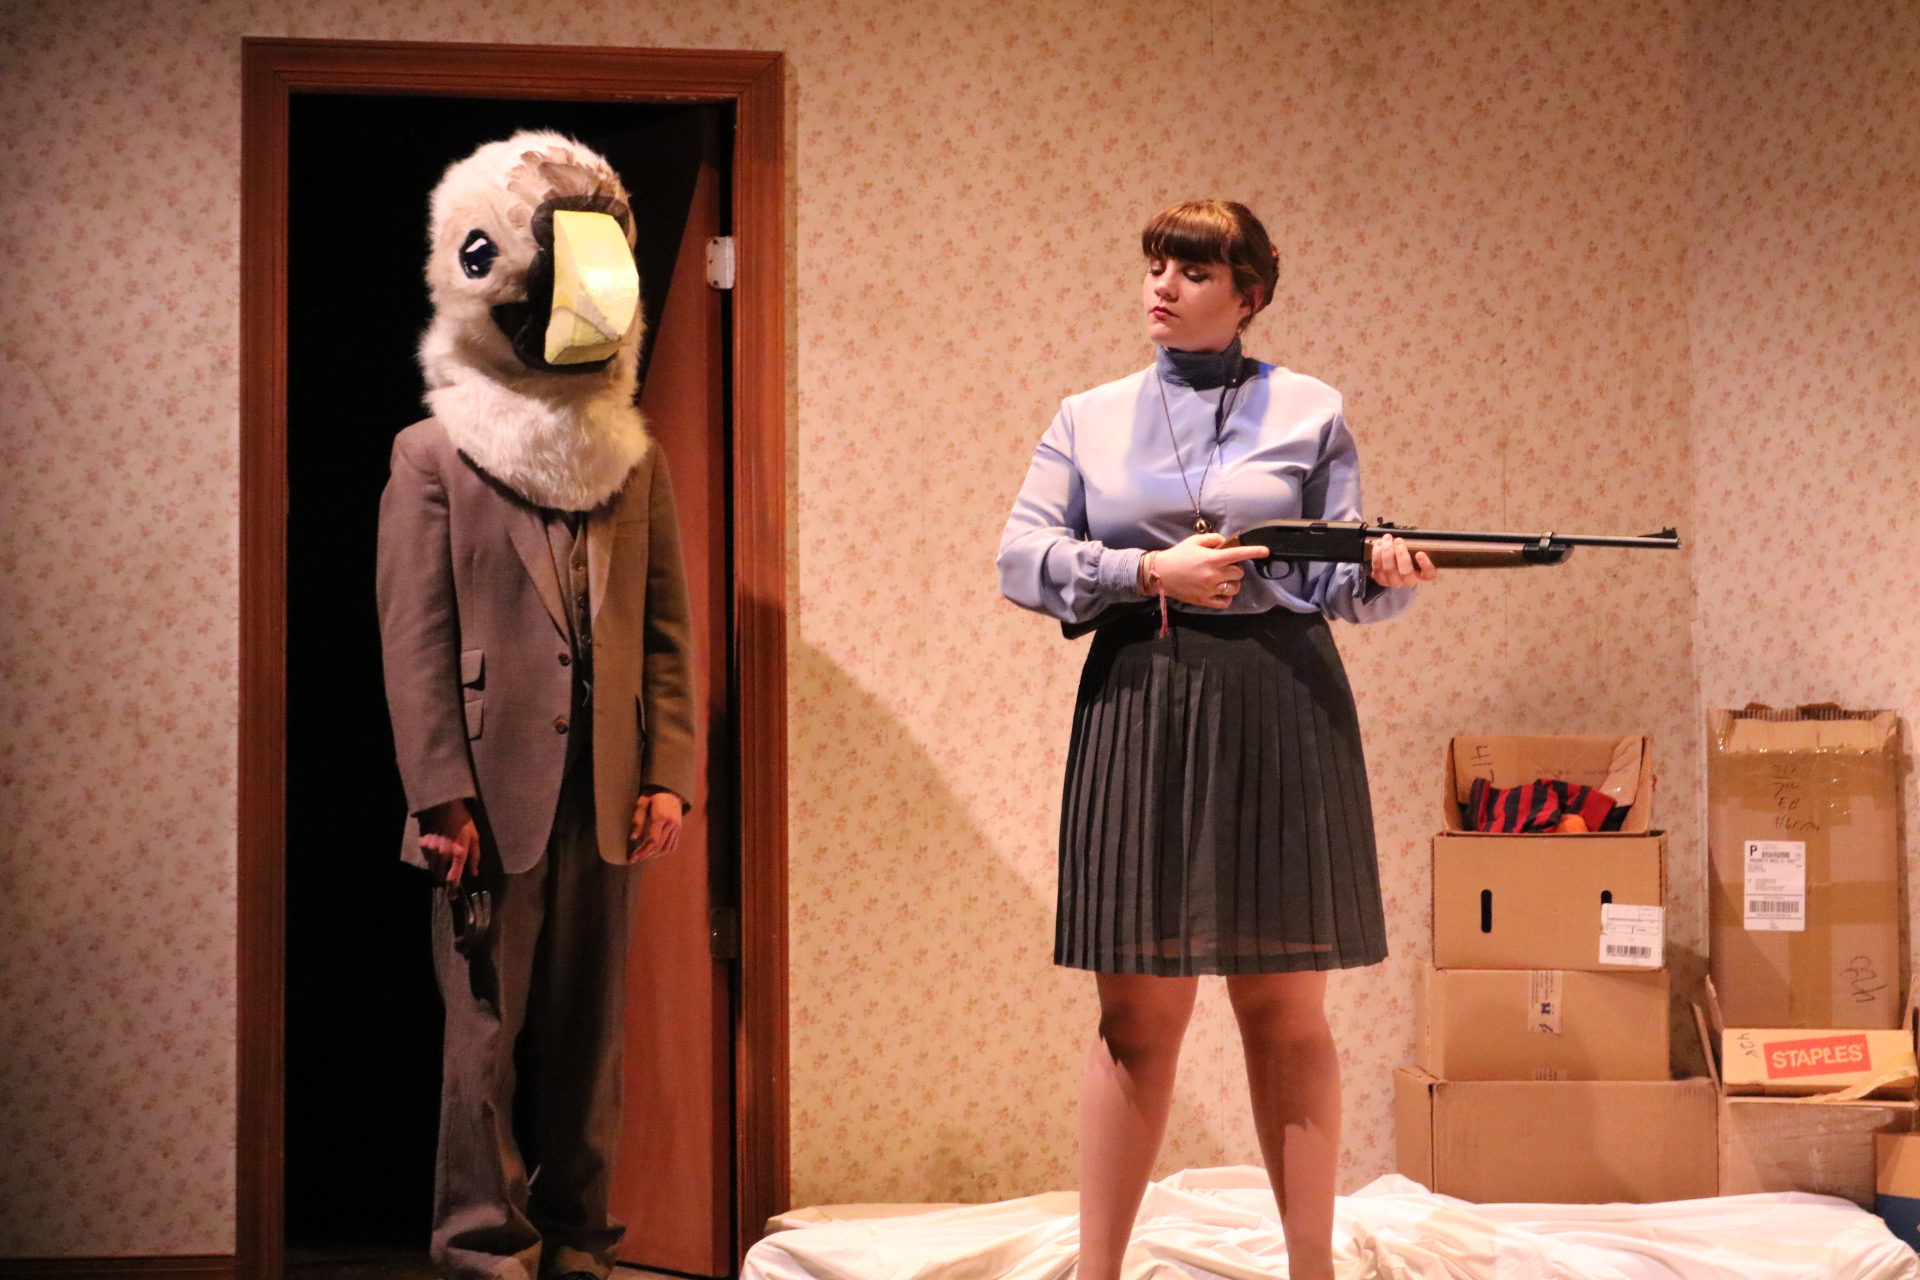 An actress holding a rifle with a man wearing a bird head costume standing near a doorway